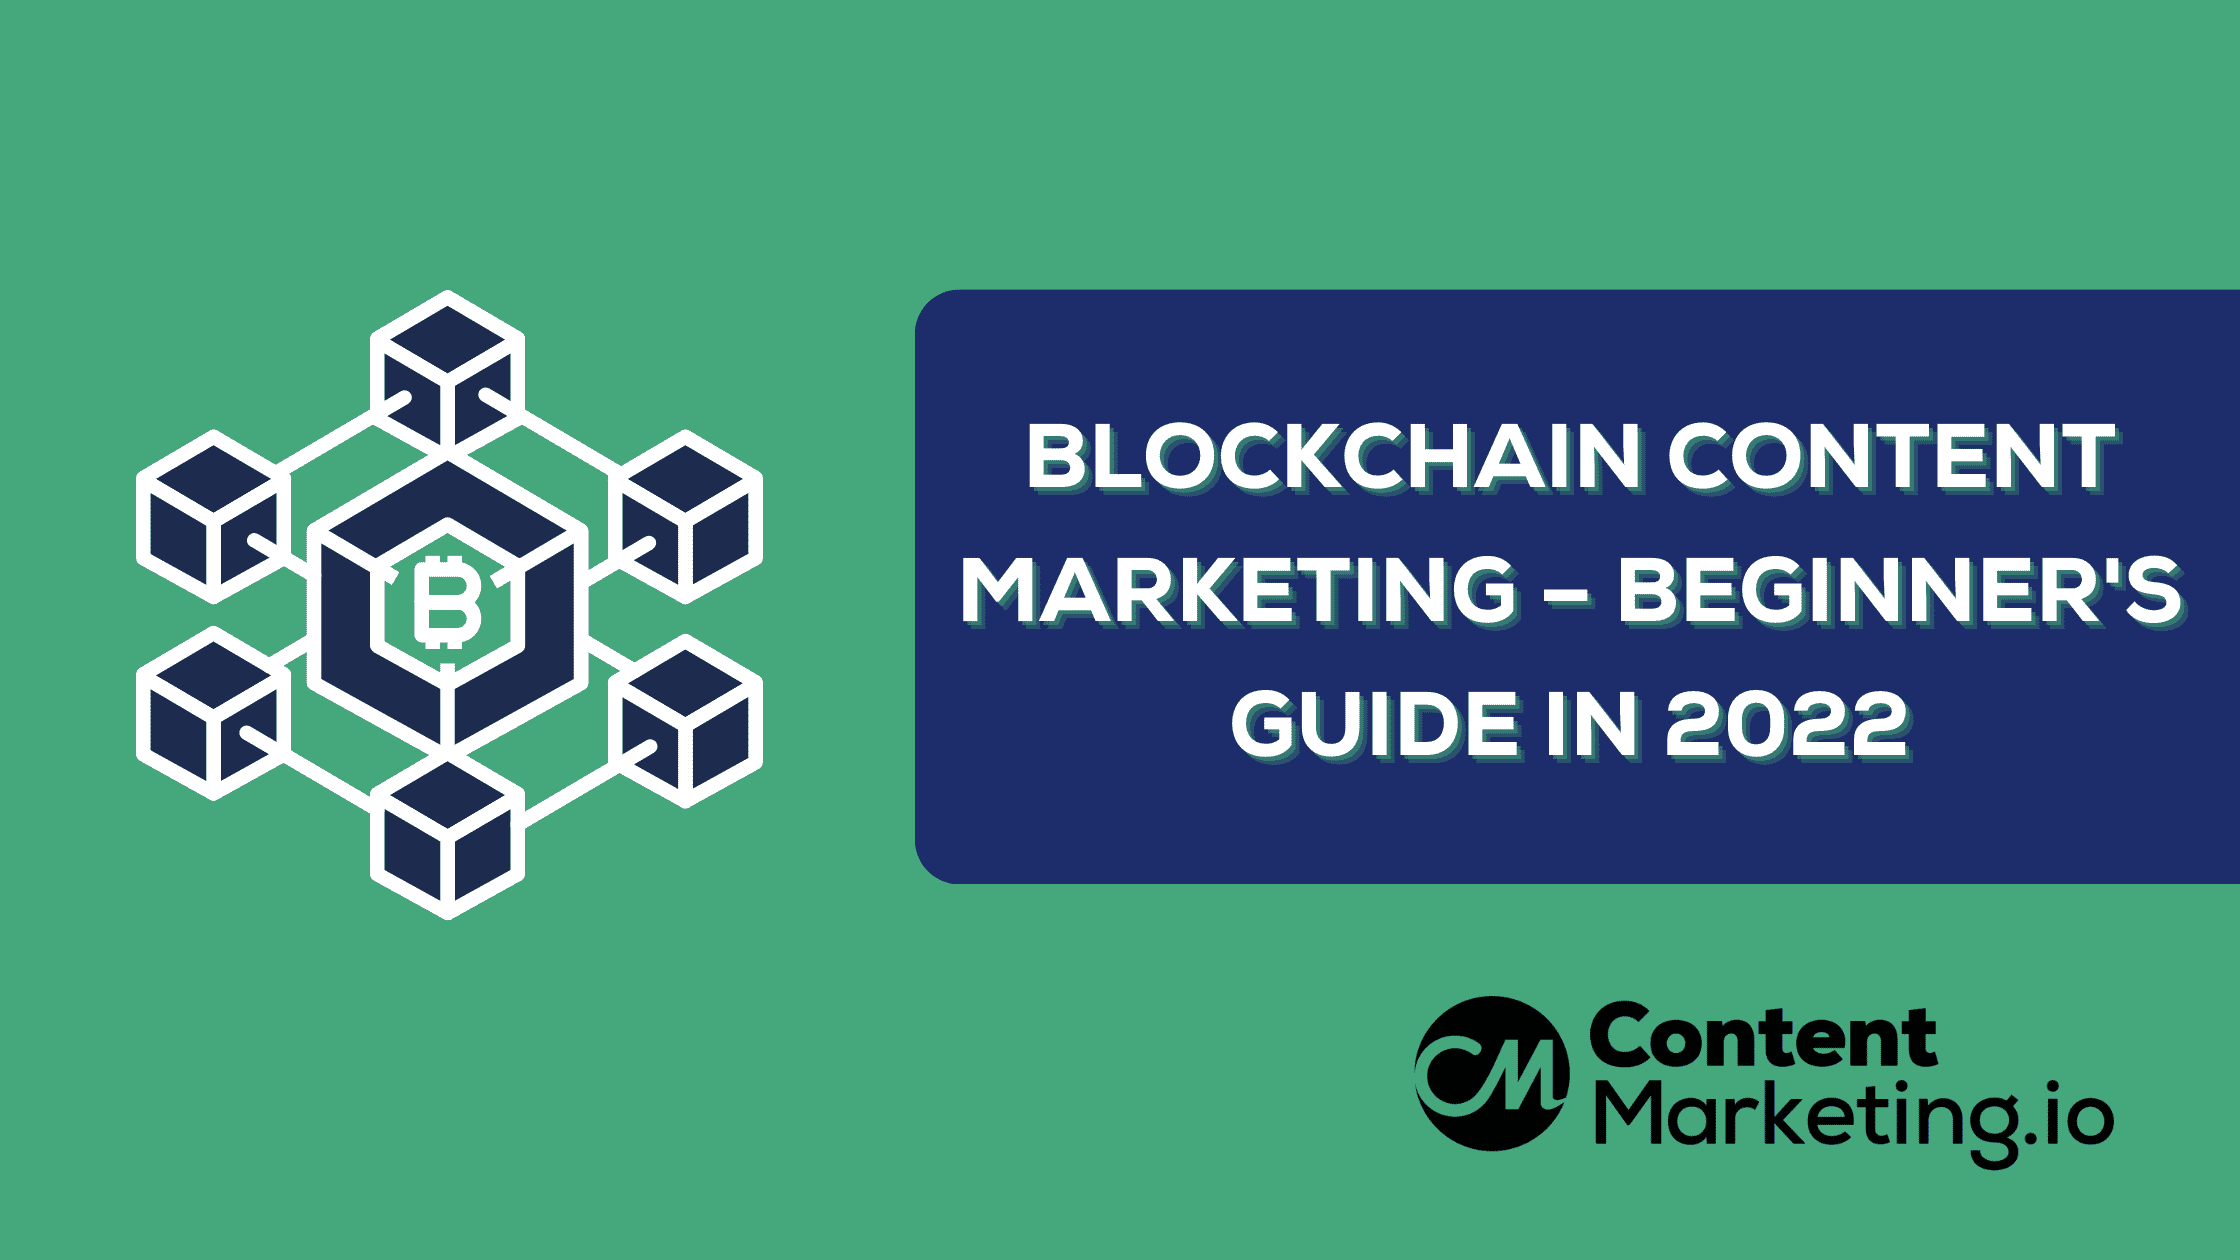 Blockchain content marketing